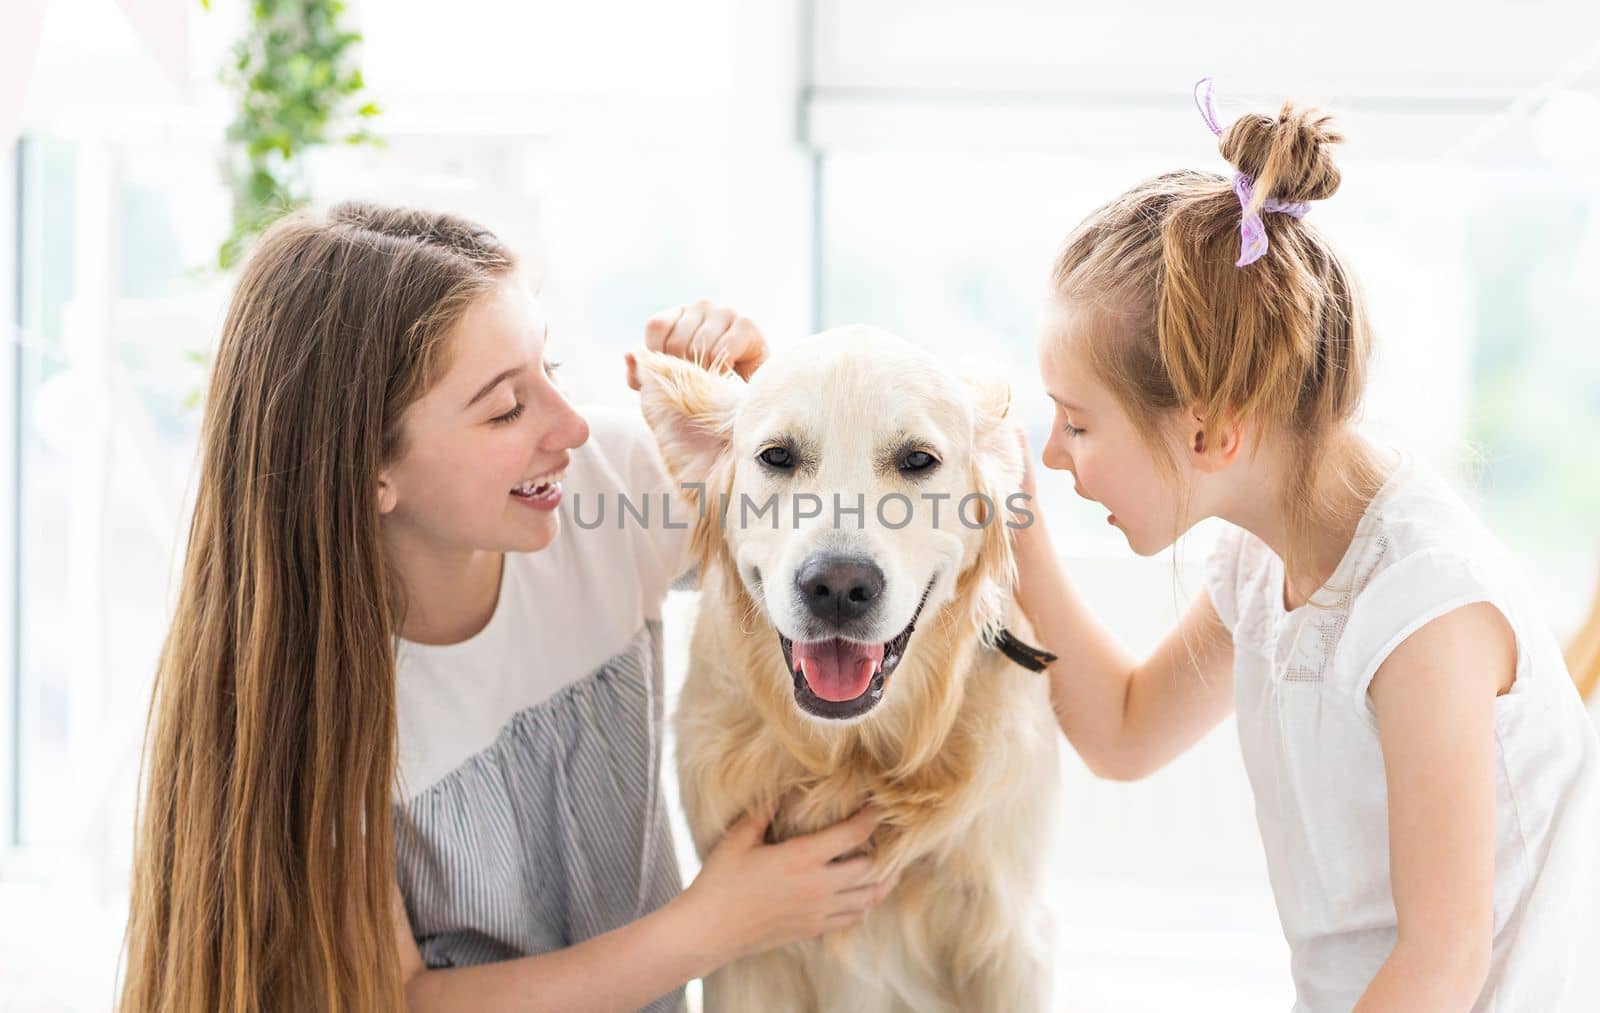 Cute girls whispering into dog's ears by GekaSkr